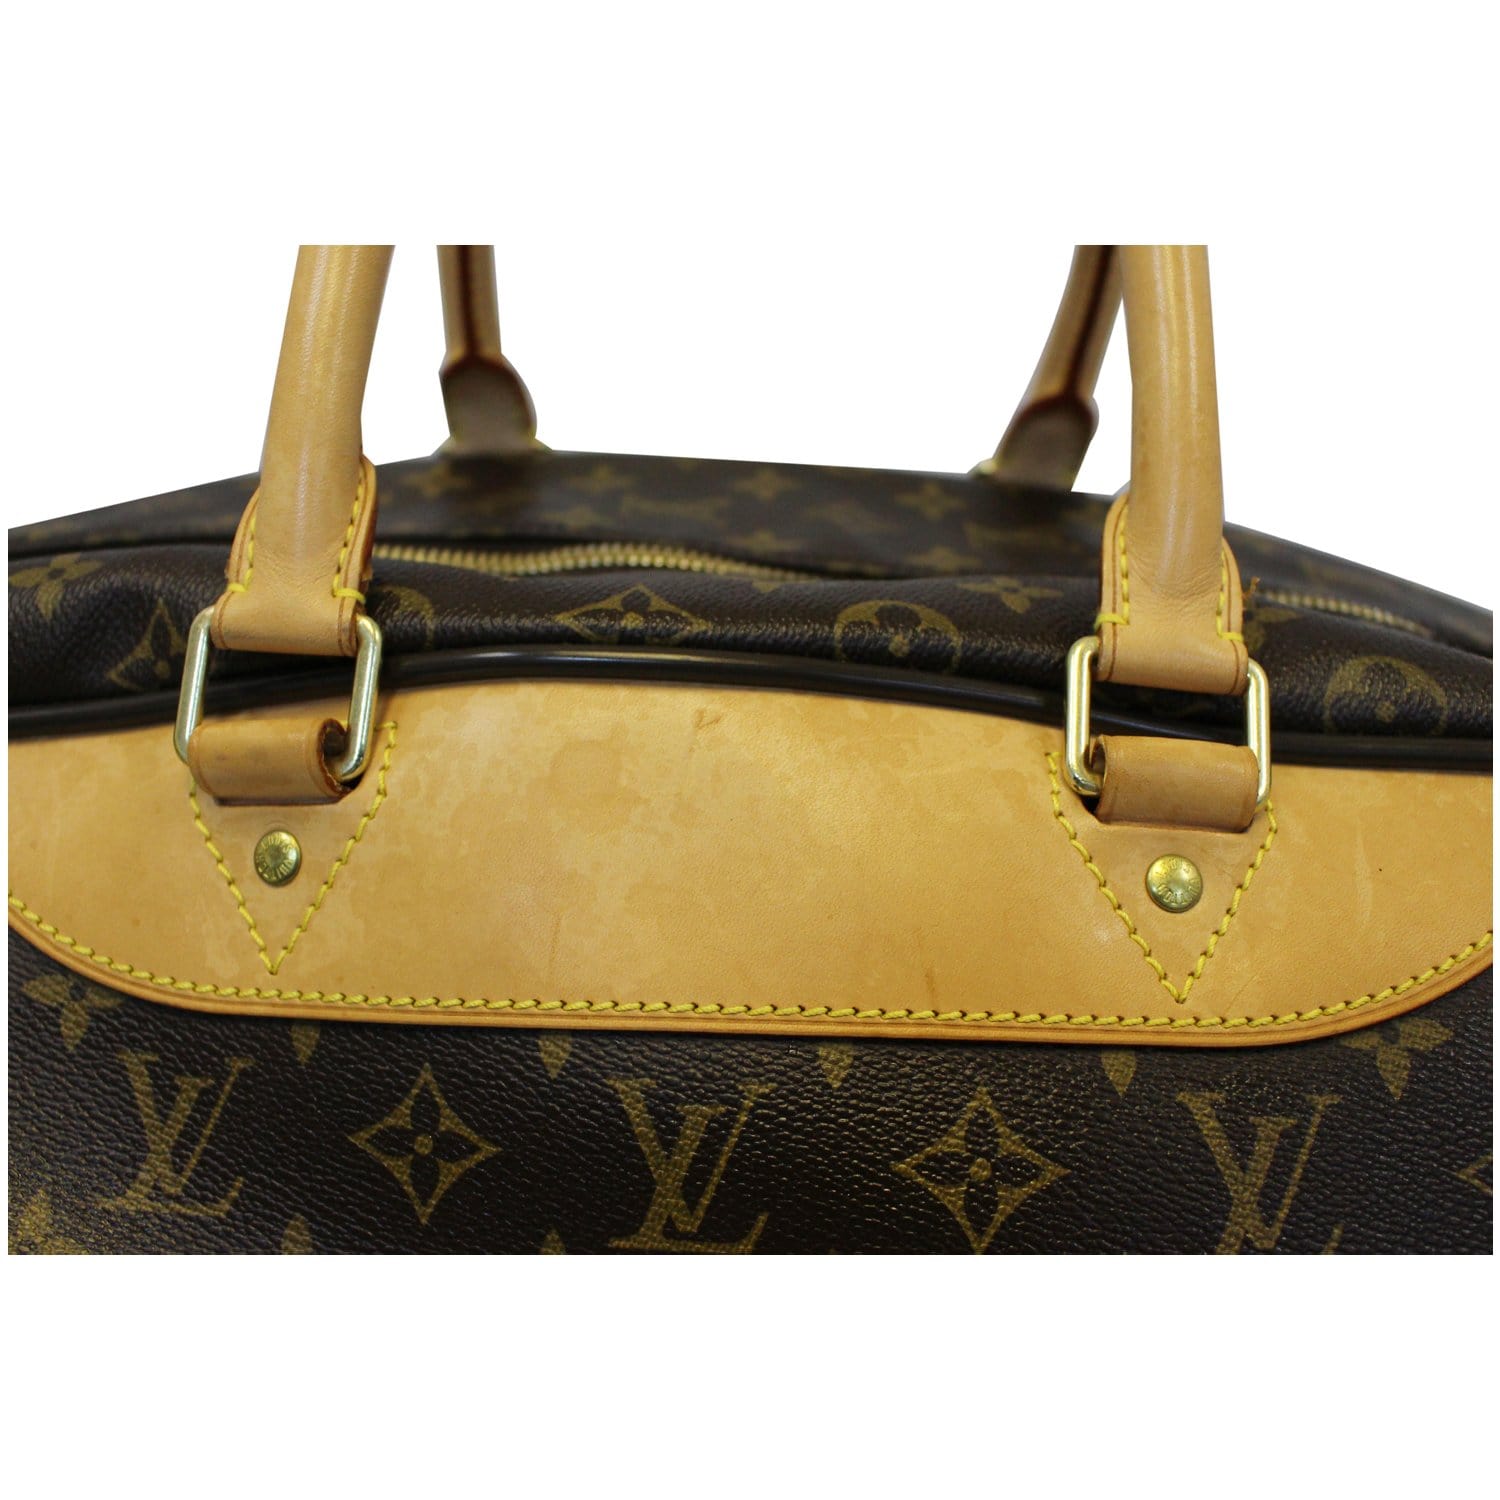 Louis Vuitton eole 60 damier ebene canvas rolling luggage. Comes